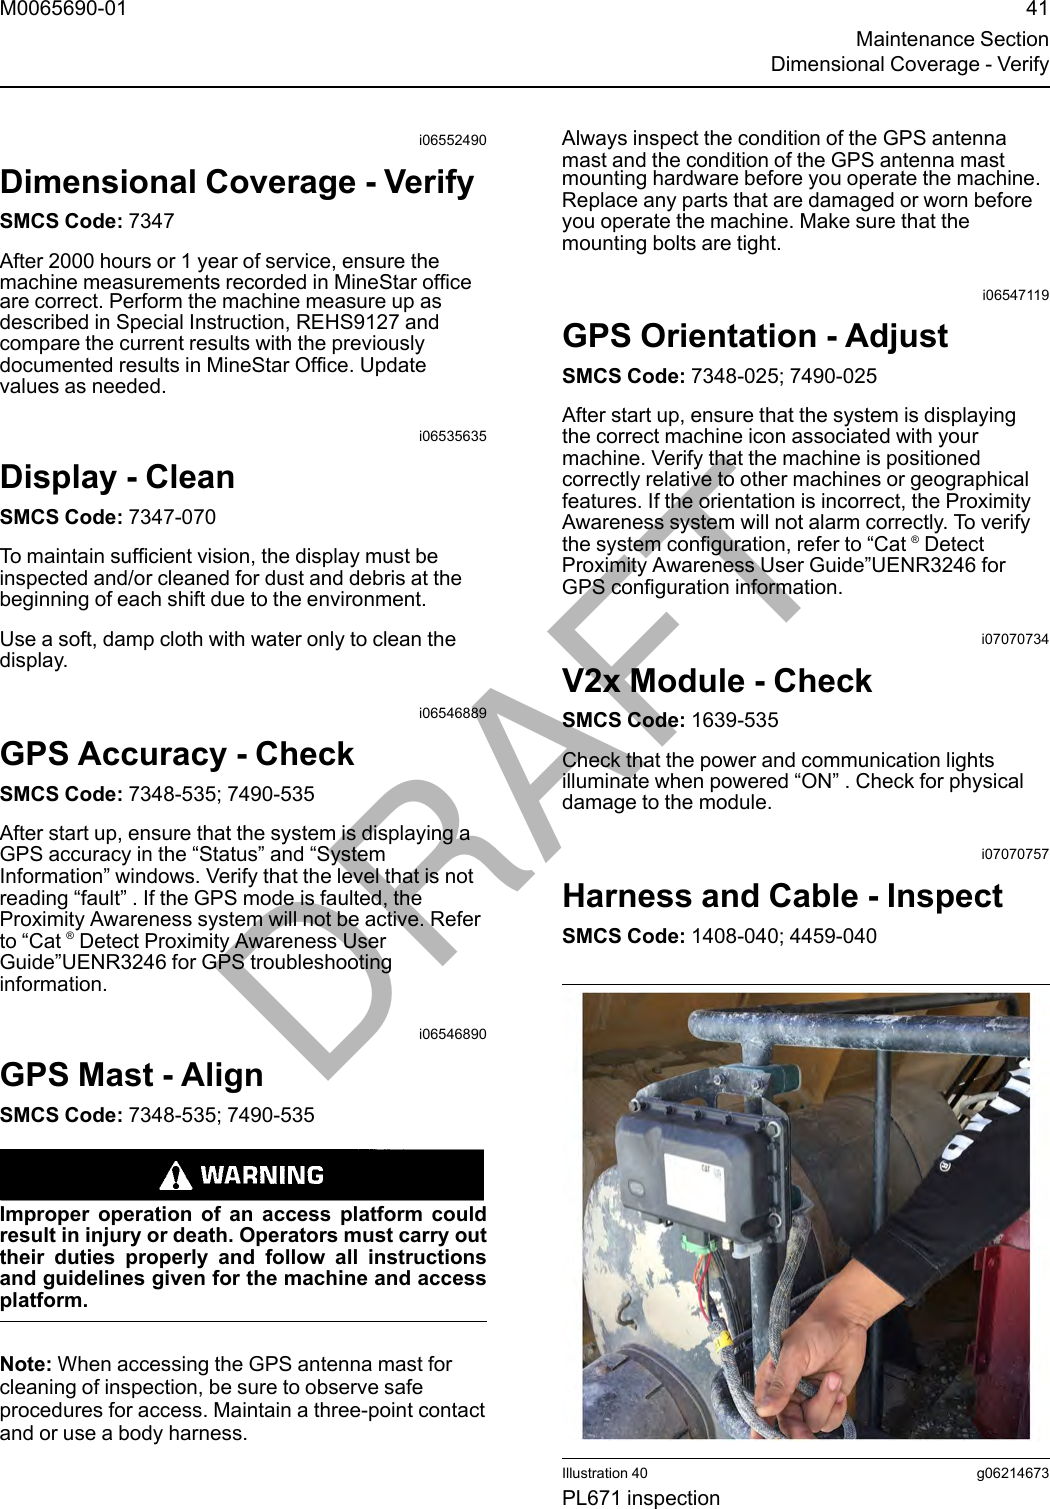 Page 41 of Caterpillar PL671 Digital Transmission System User Manual 